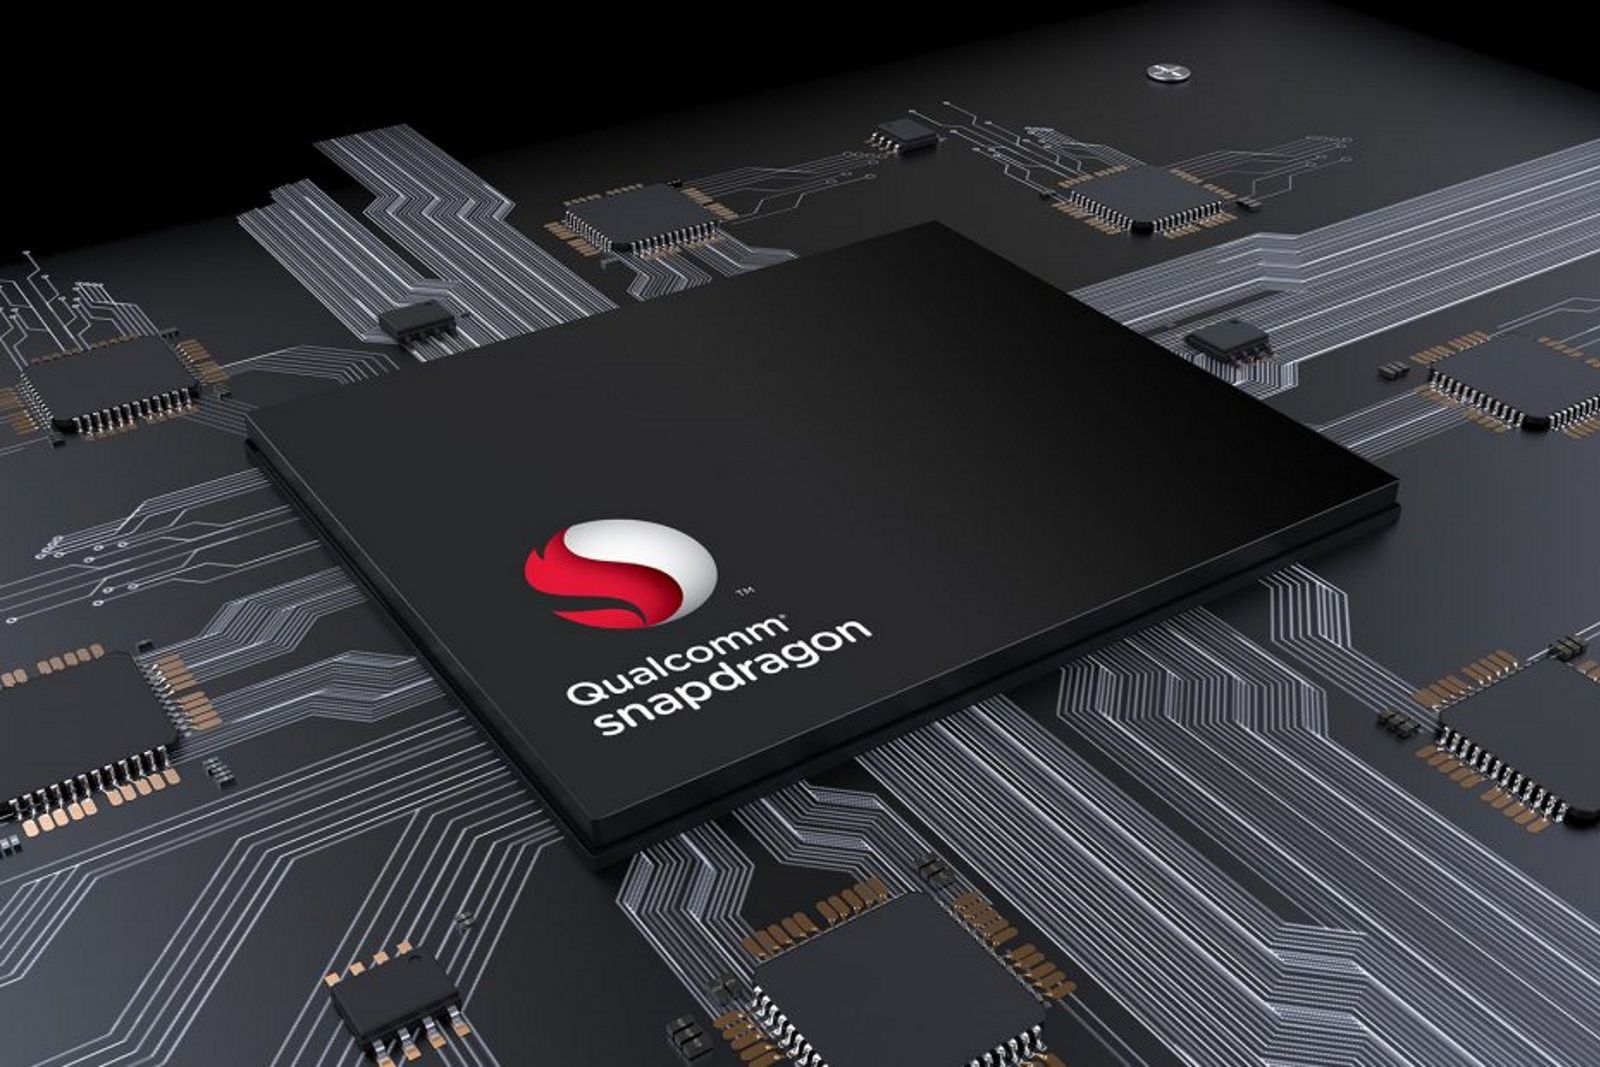 Qualcomm Snapdragon chip artist impression